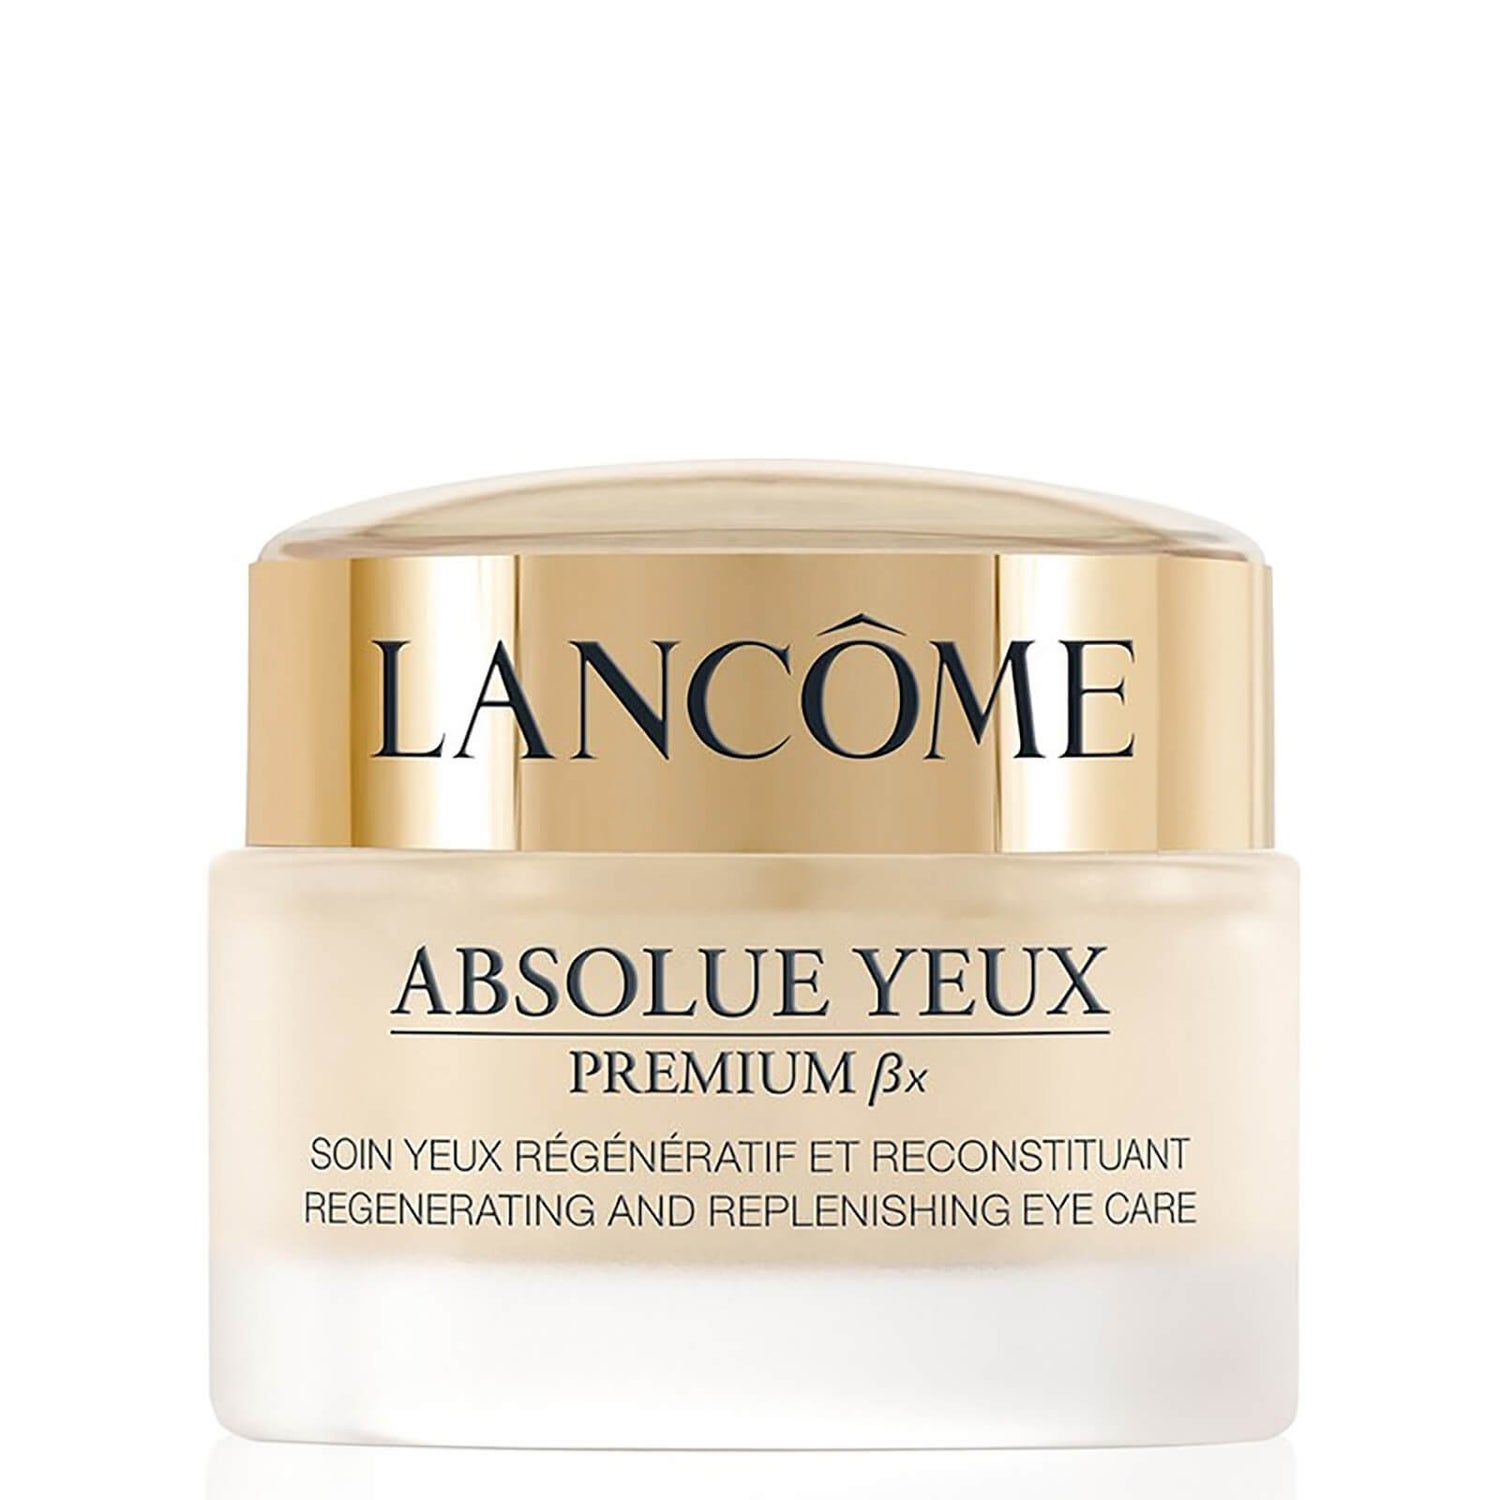 Crema de ojos Absolue Yeux Premium BX de Lancôme 20 ml